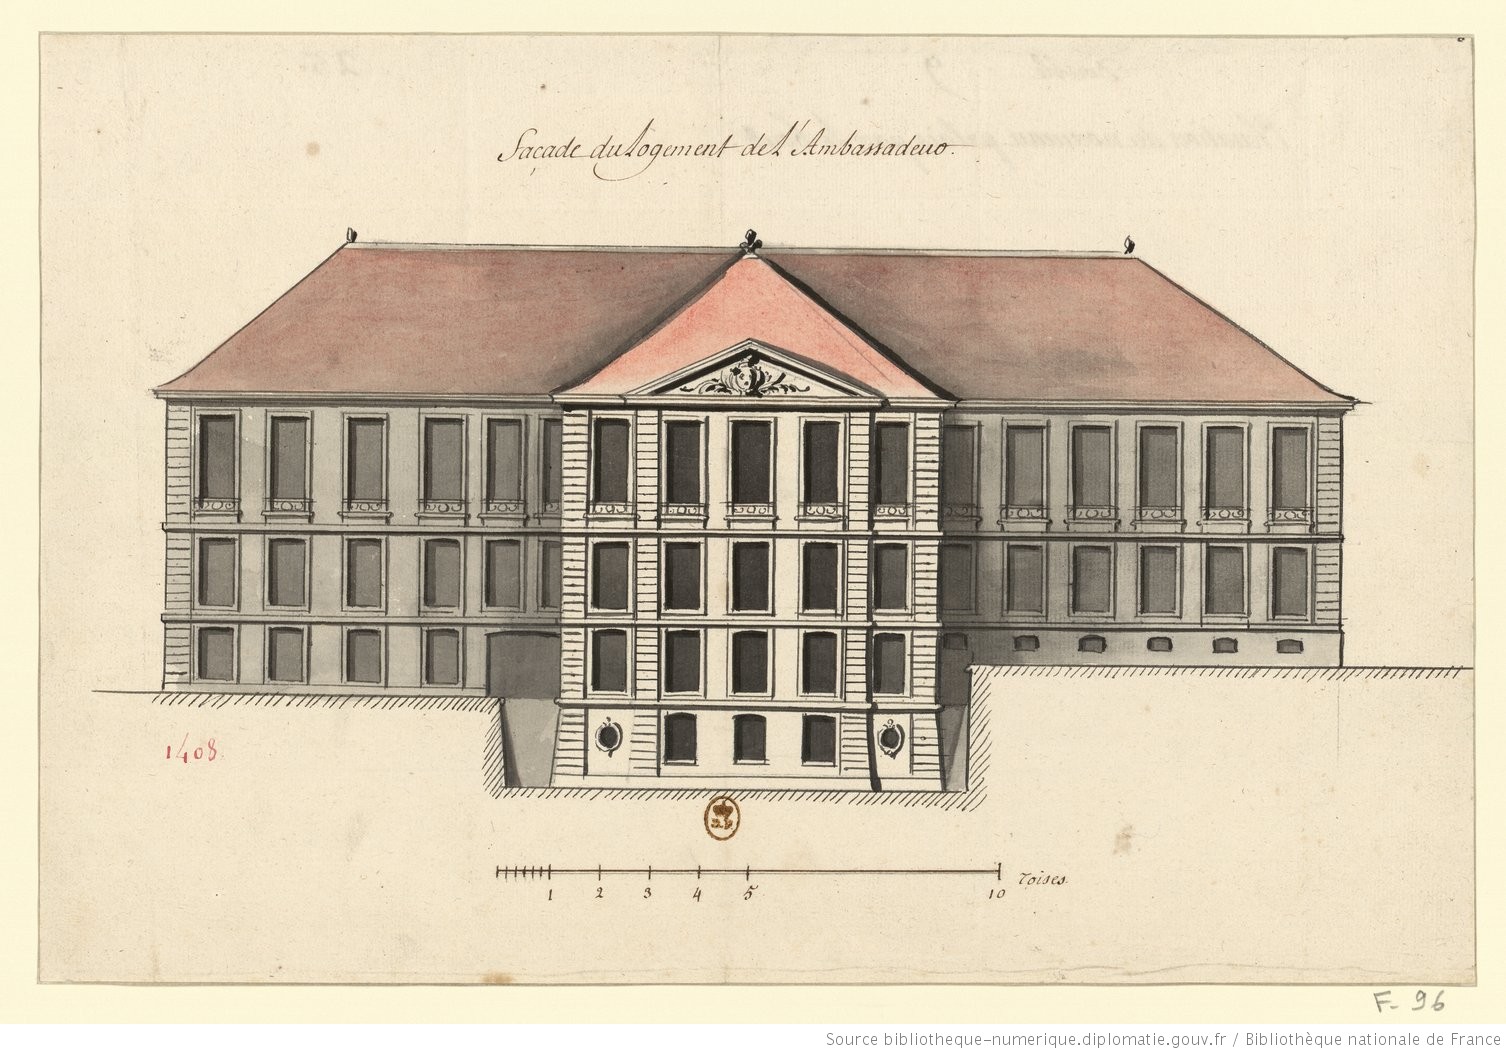 Gravure de la façade du logement de l'ambassadeur de France à Constantinople